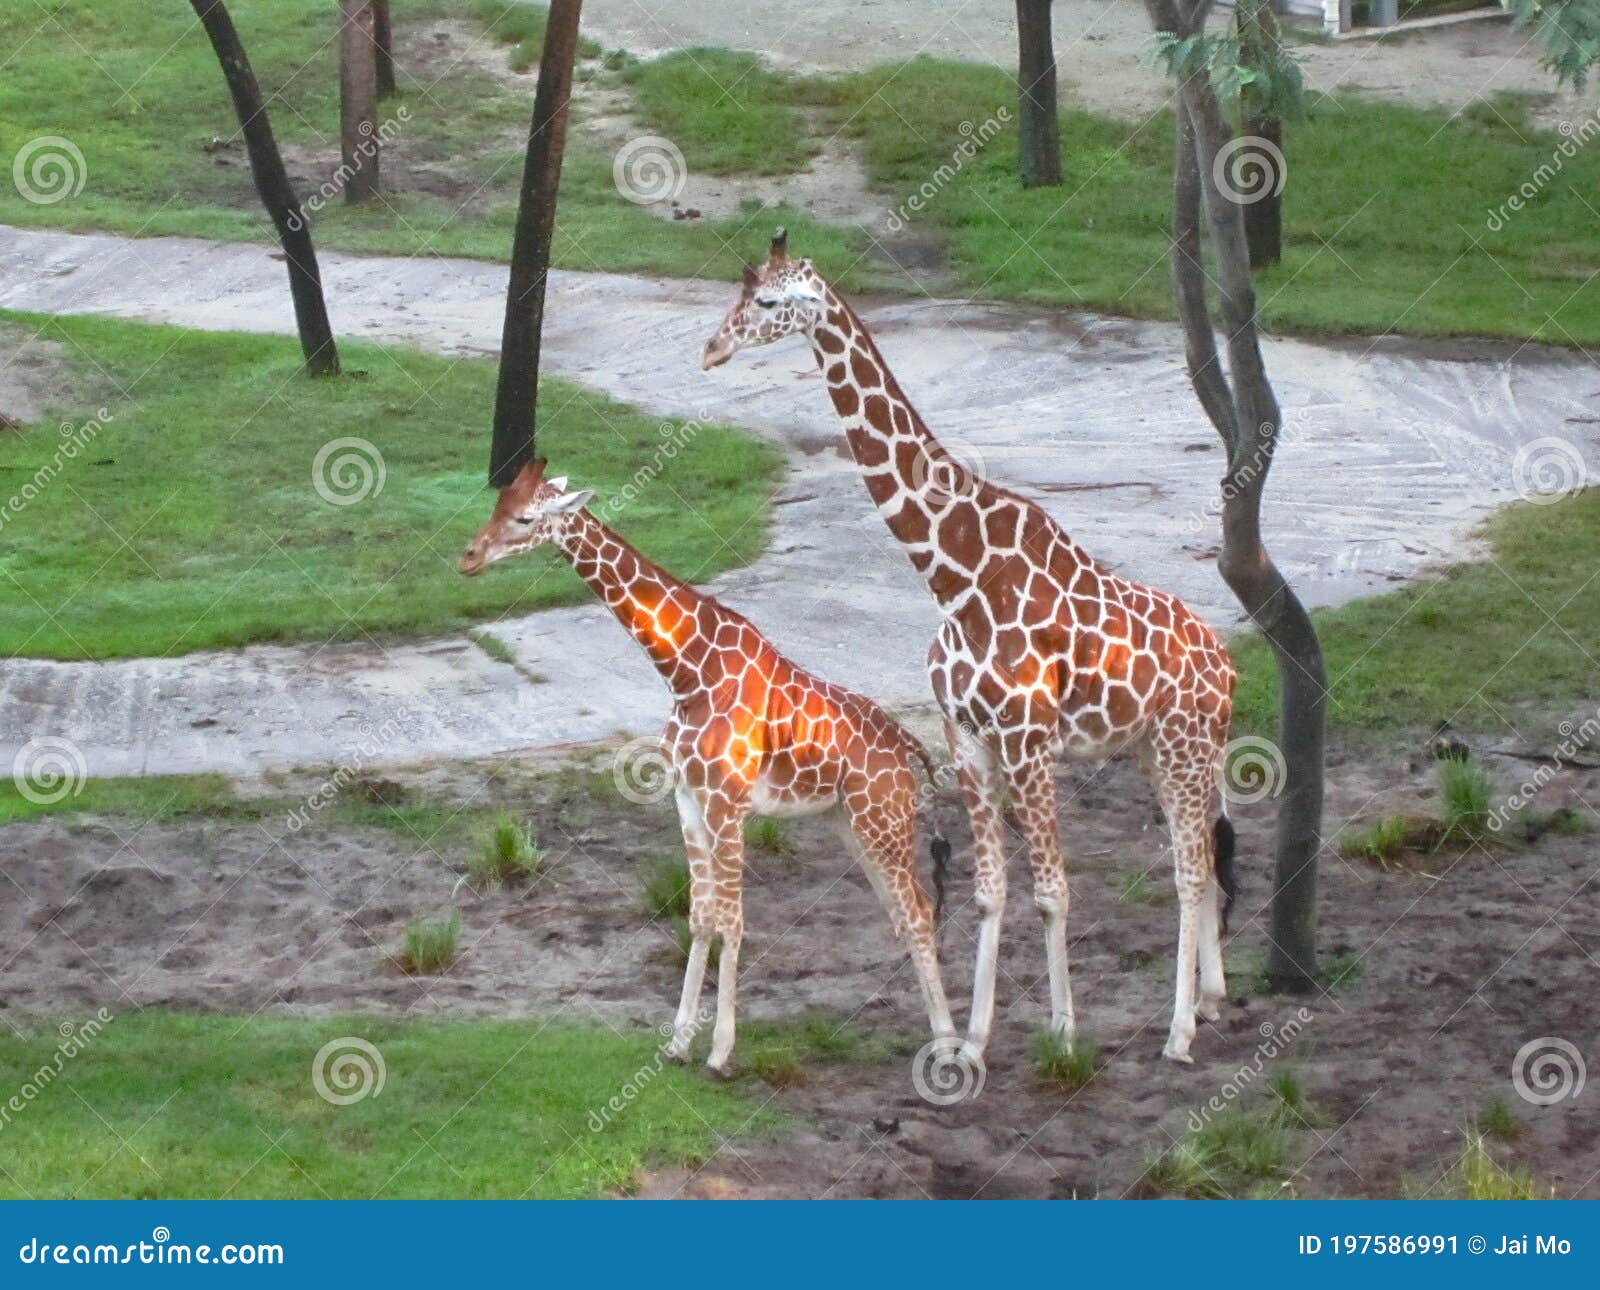 wonderful world of two giraffes